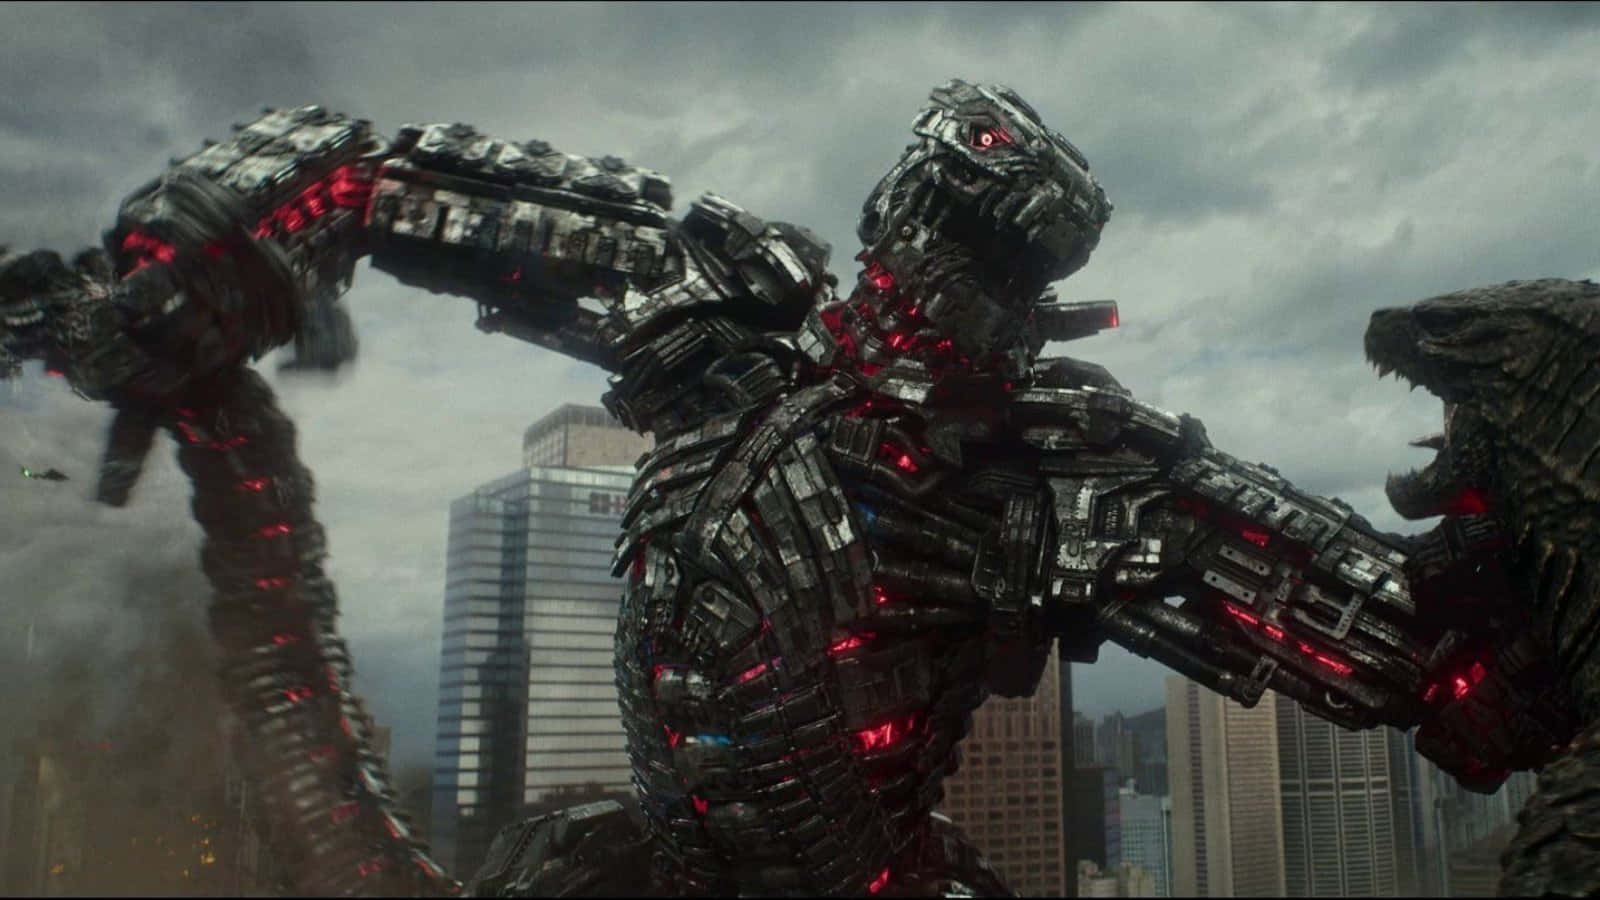 The Fierce Robot Godzilla in Action Wallpaper